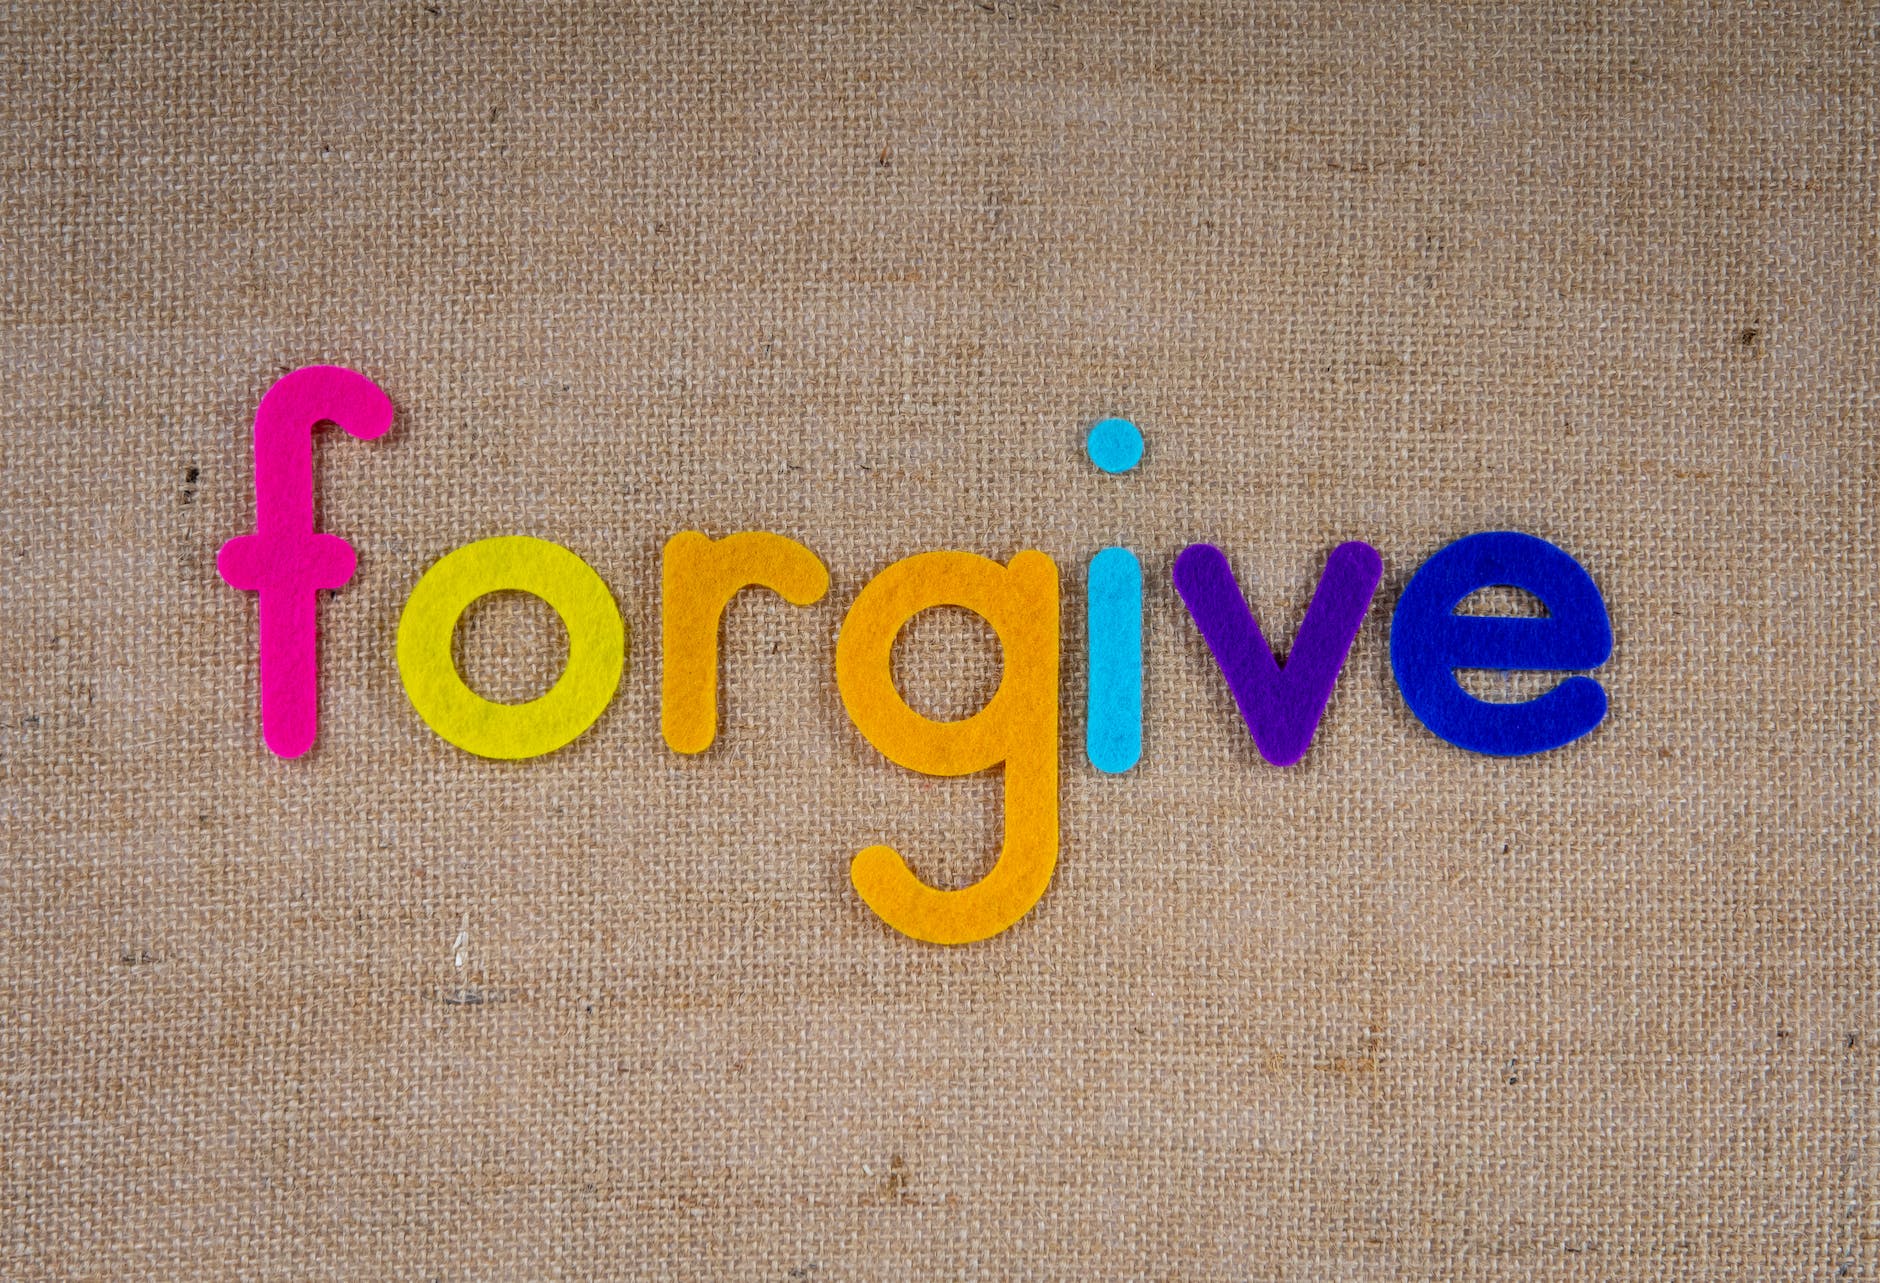 Forgive
